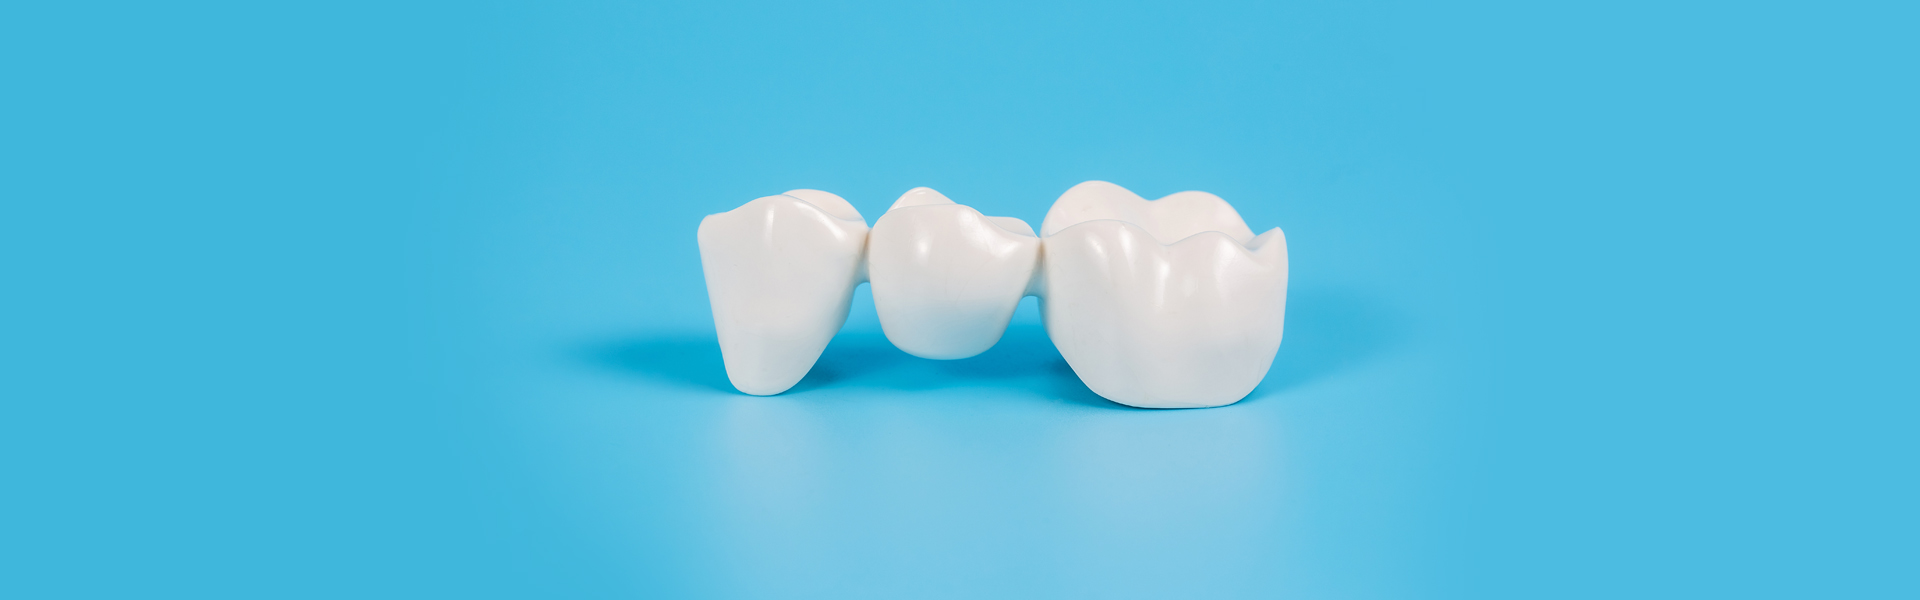 My Dental Bridge Cracked: What Should I Do?